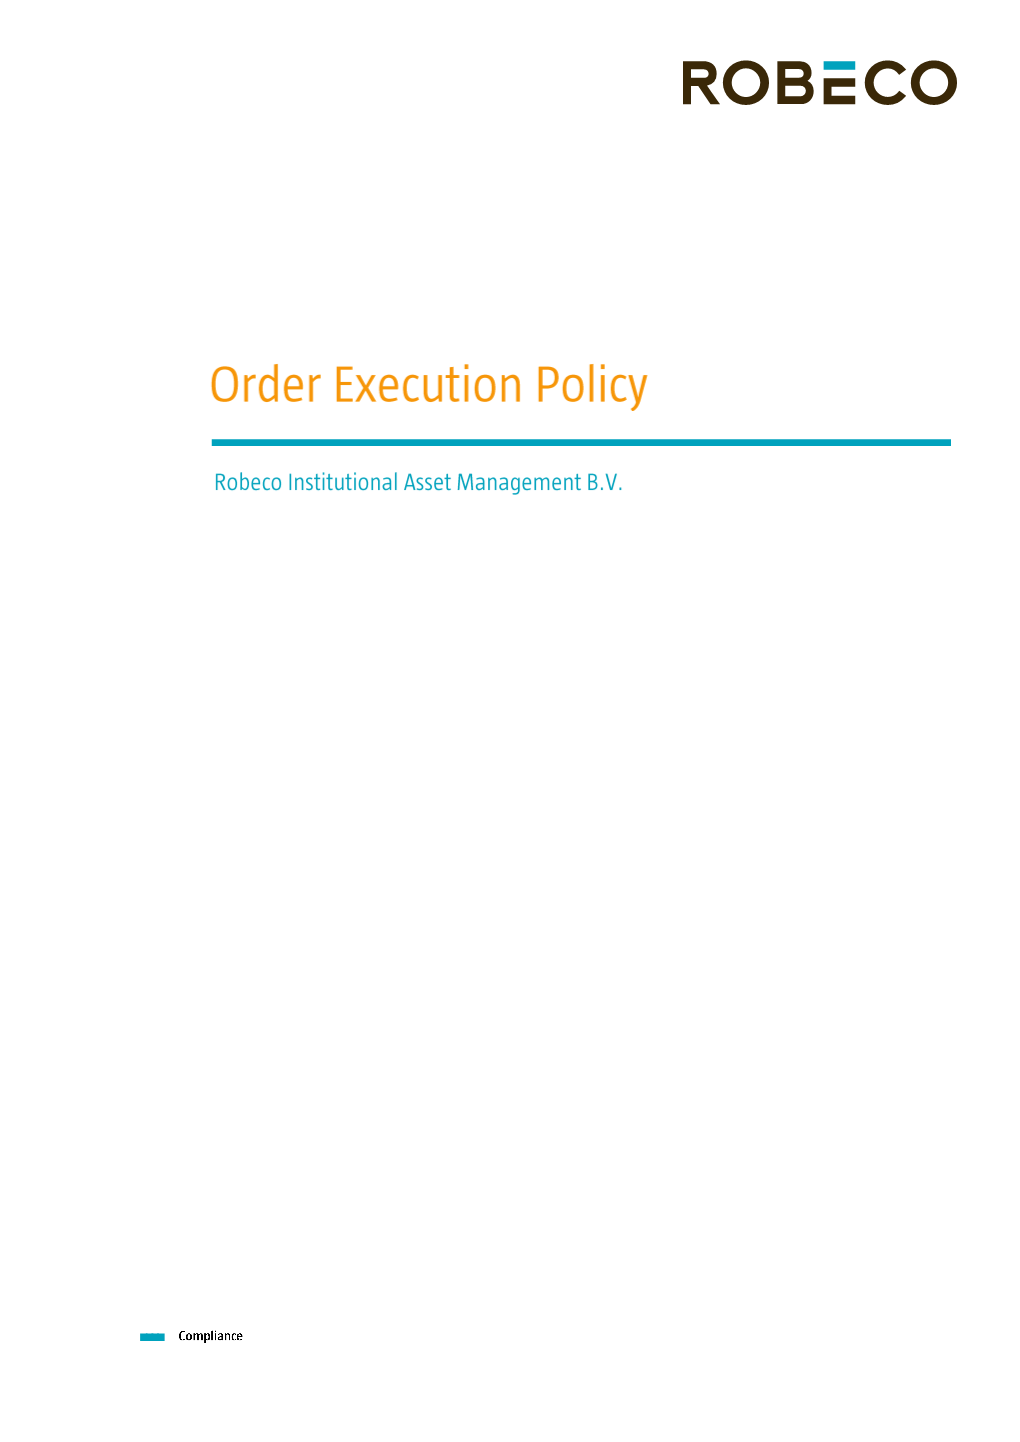 Docu-Robeco-Order-Execution-Policy